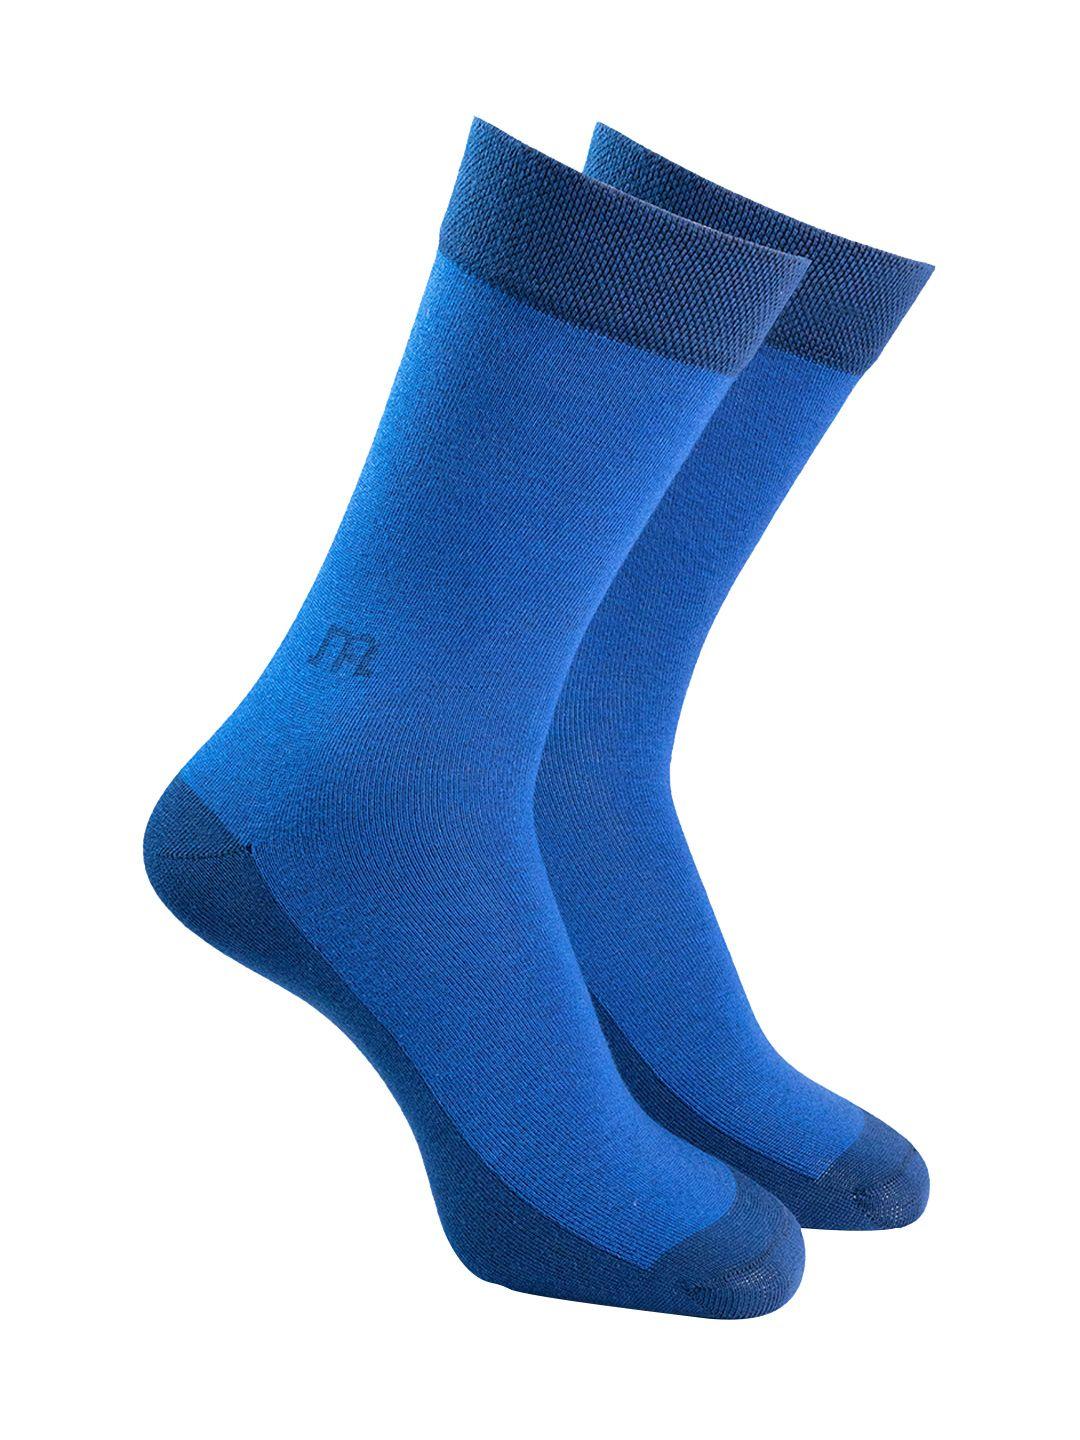 man arden men navy blue & black patterned calf-length cotton socks